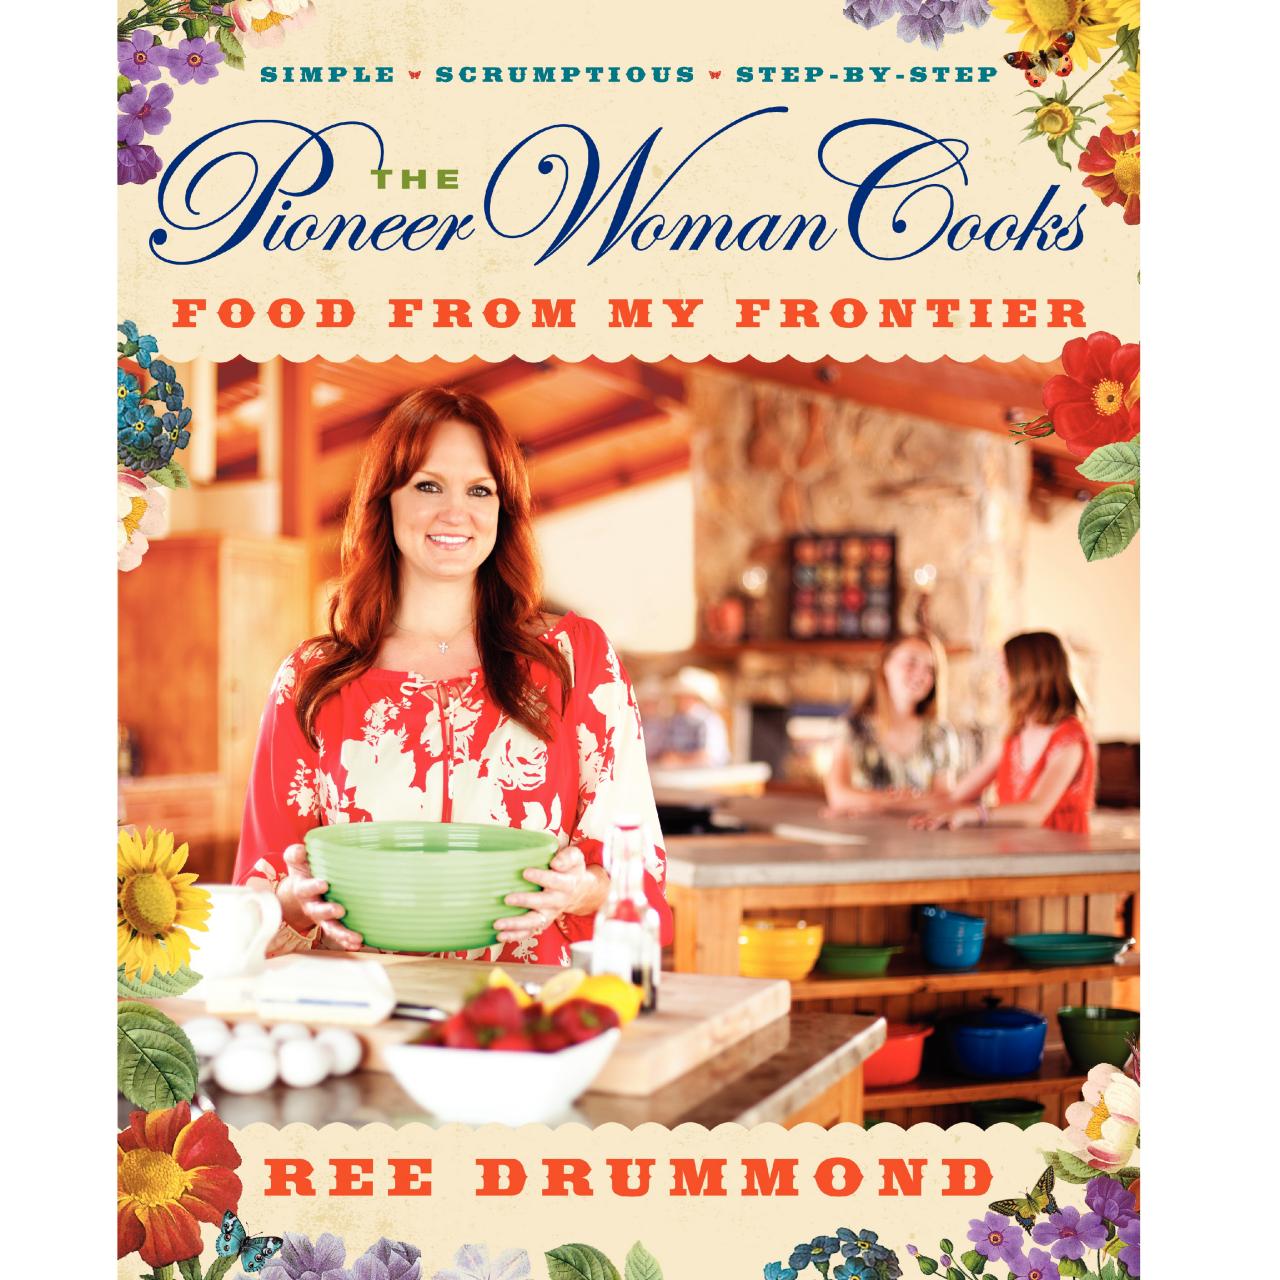 https://food.fnr.sndimg.com/content/dam/images/food/fullset/2012/2/22/0/FN_Pioneer-Woman-Cooks_s4x3.jpg.rend.hgtvcom.1280.1280.suffix/1371606205636.jpeg